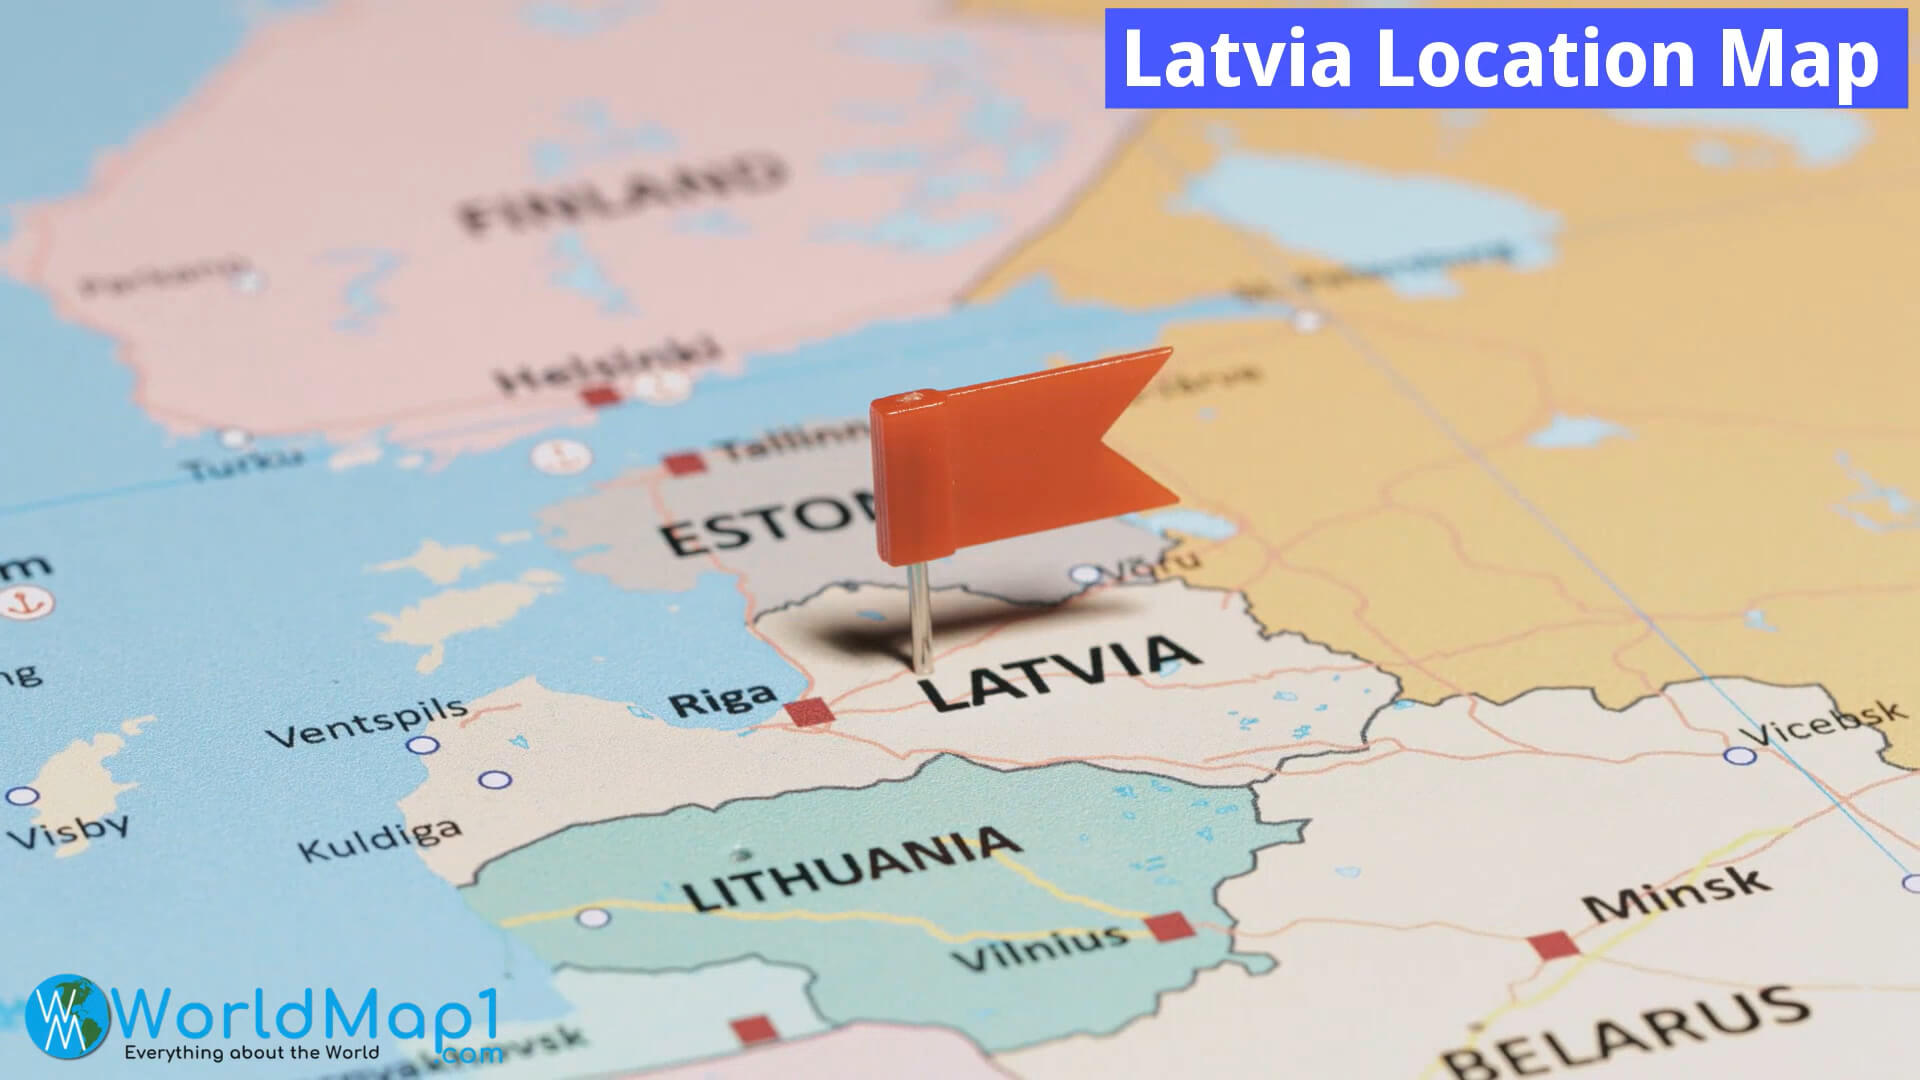 Lettland Lageplan